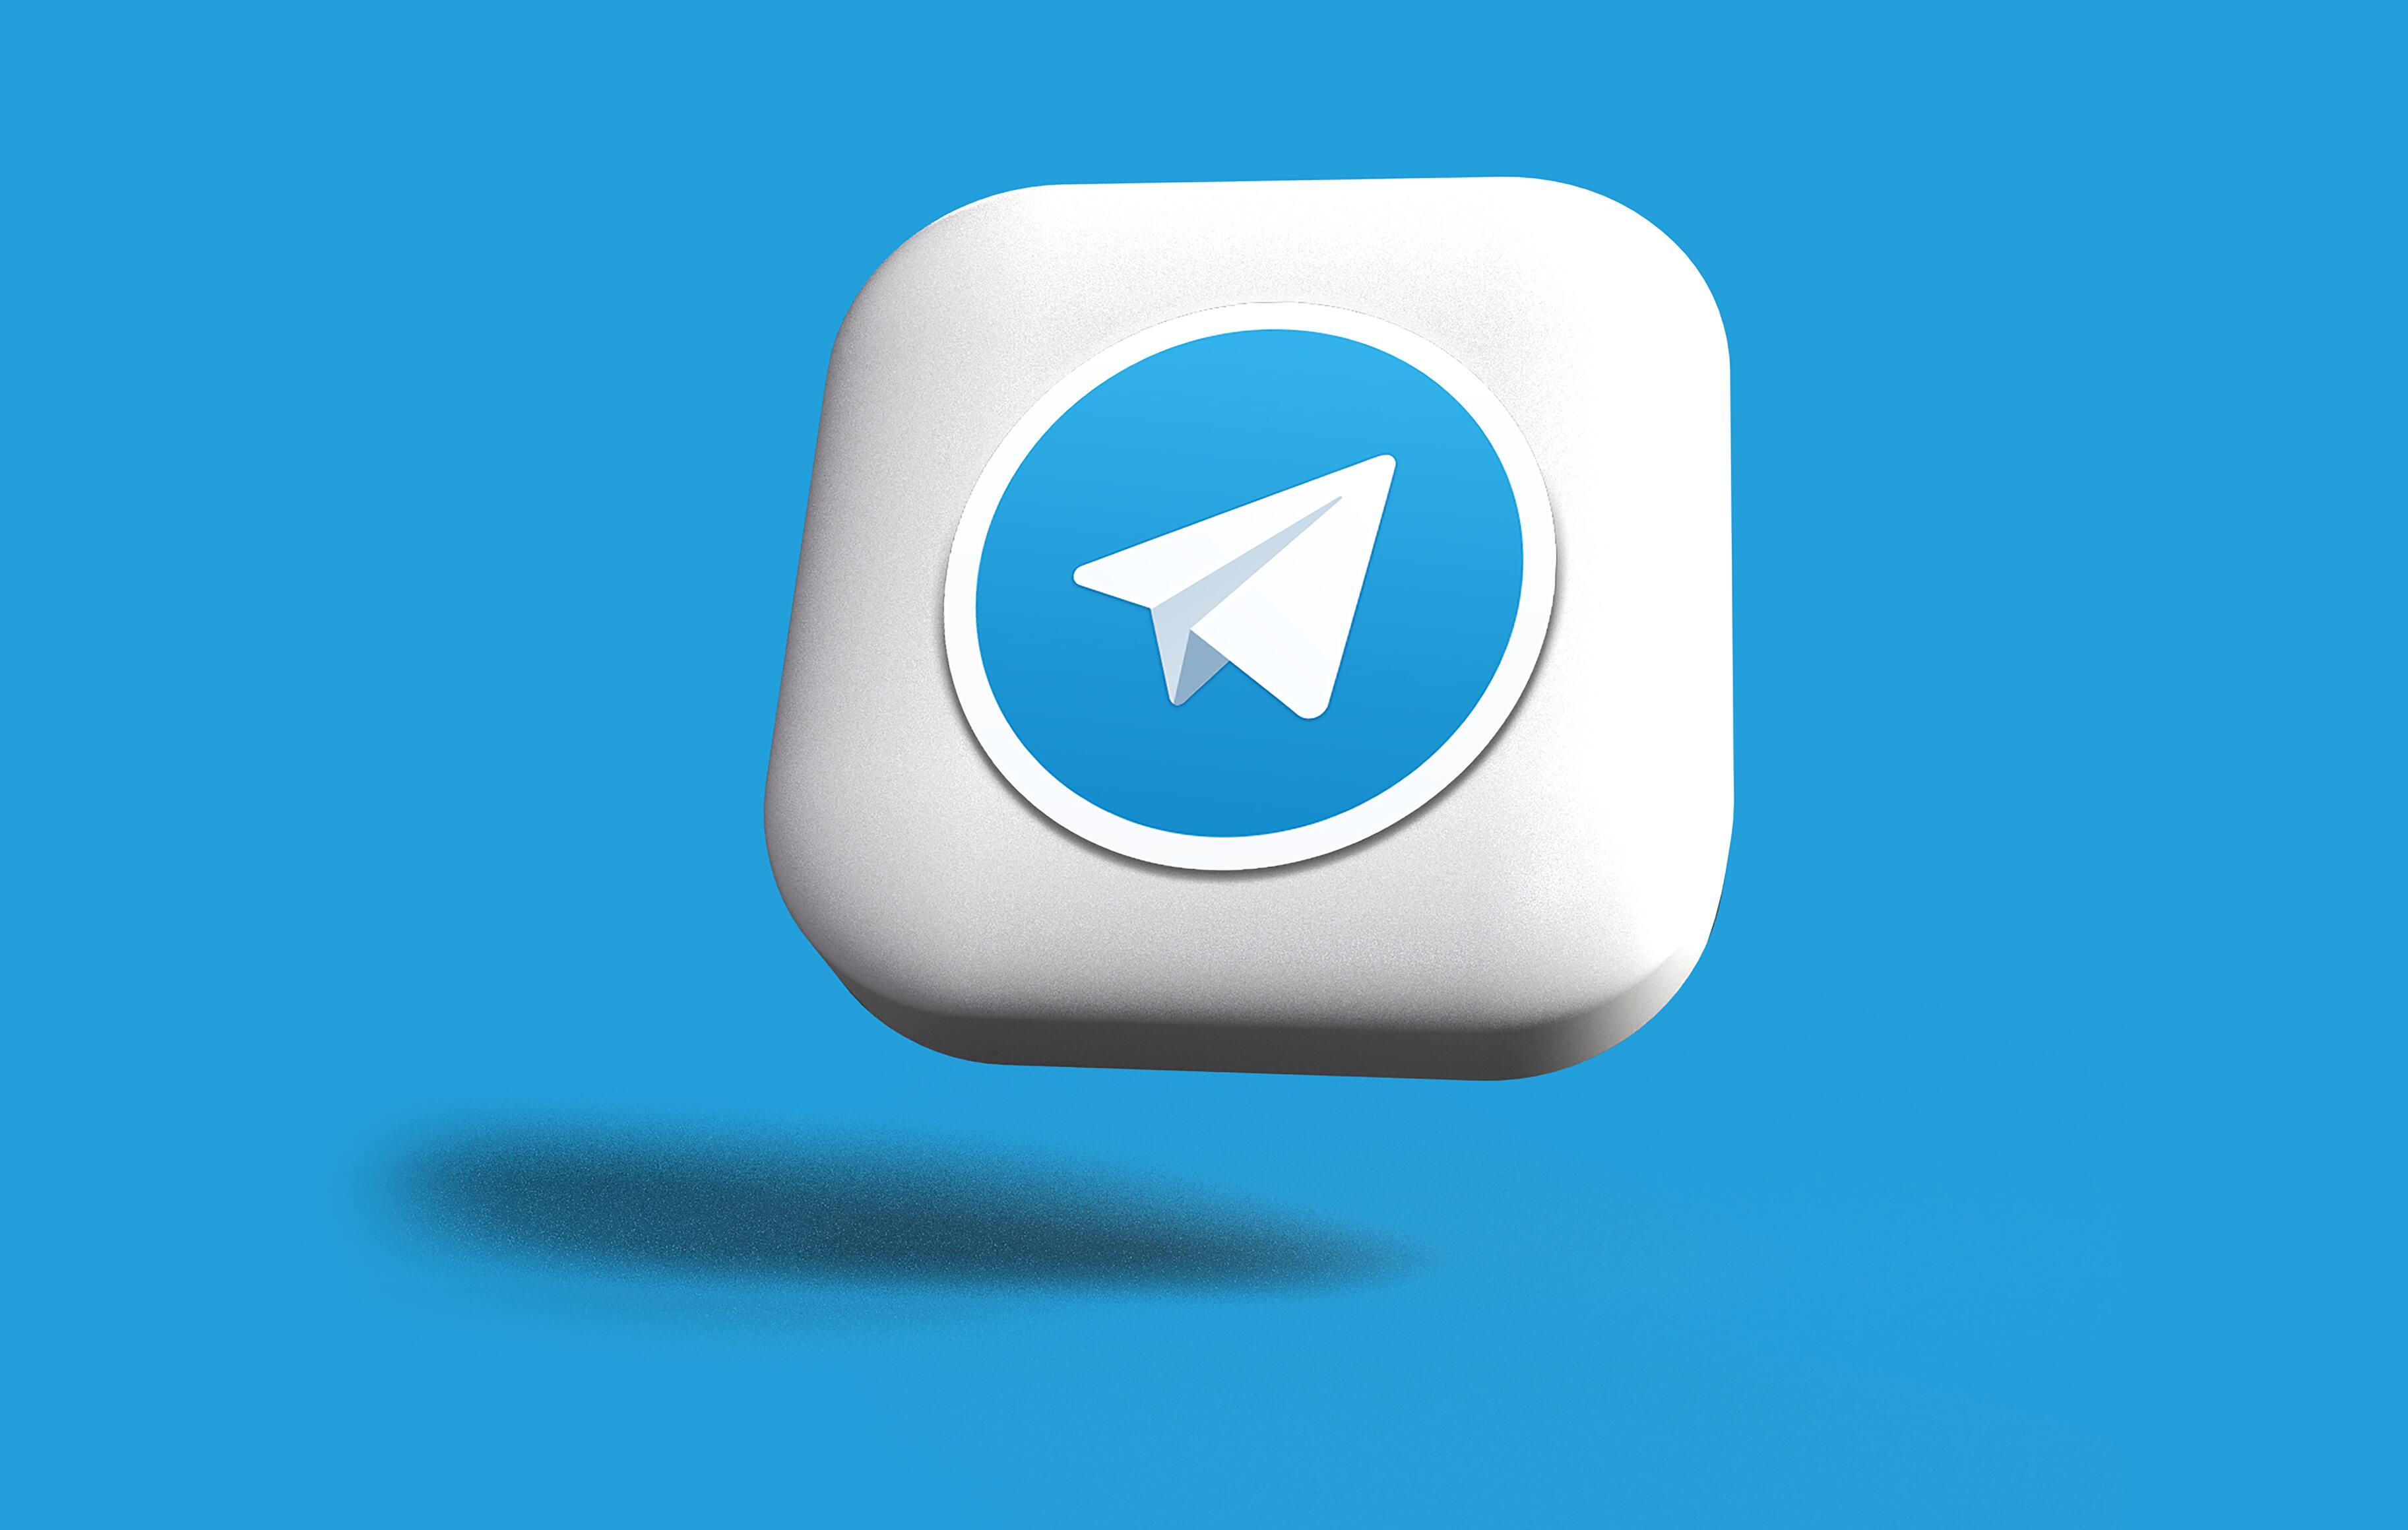    telegram-      